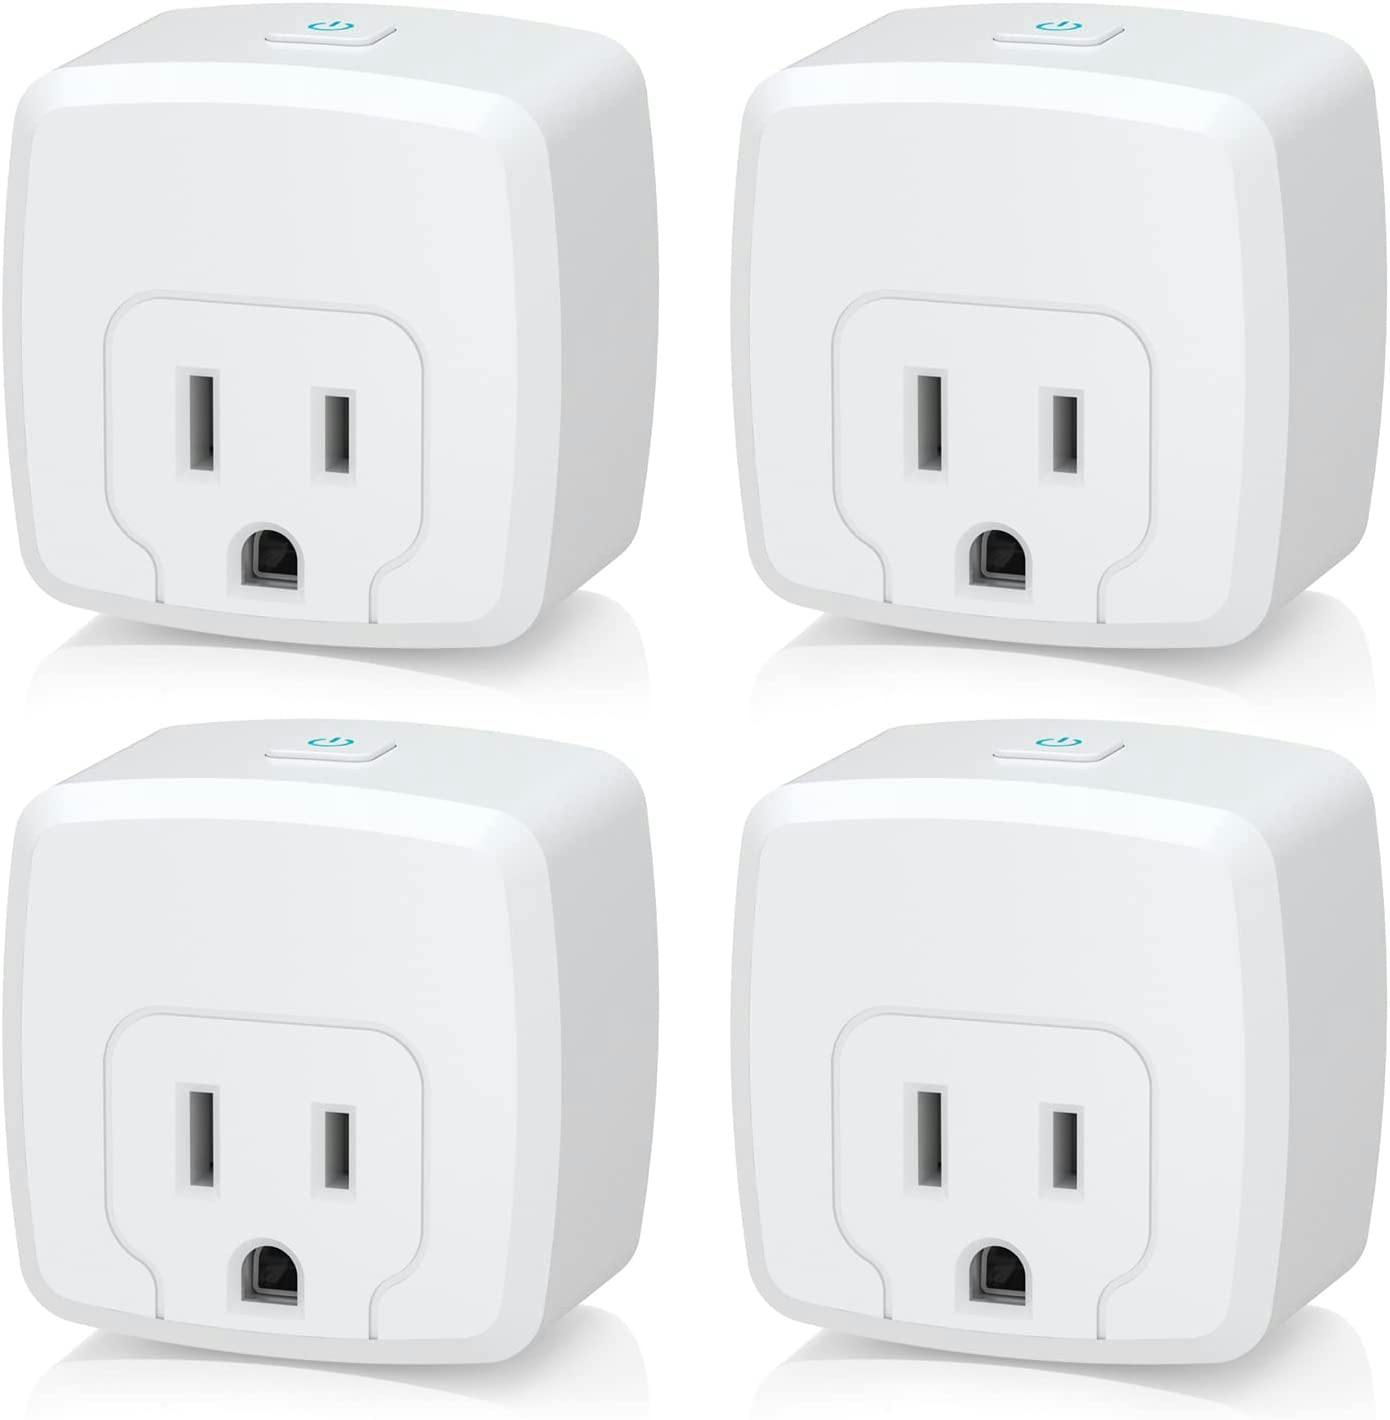 HBN smart plug mini smart outlet